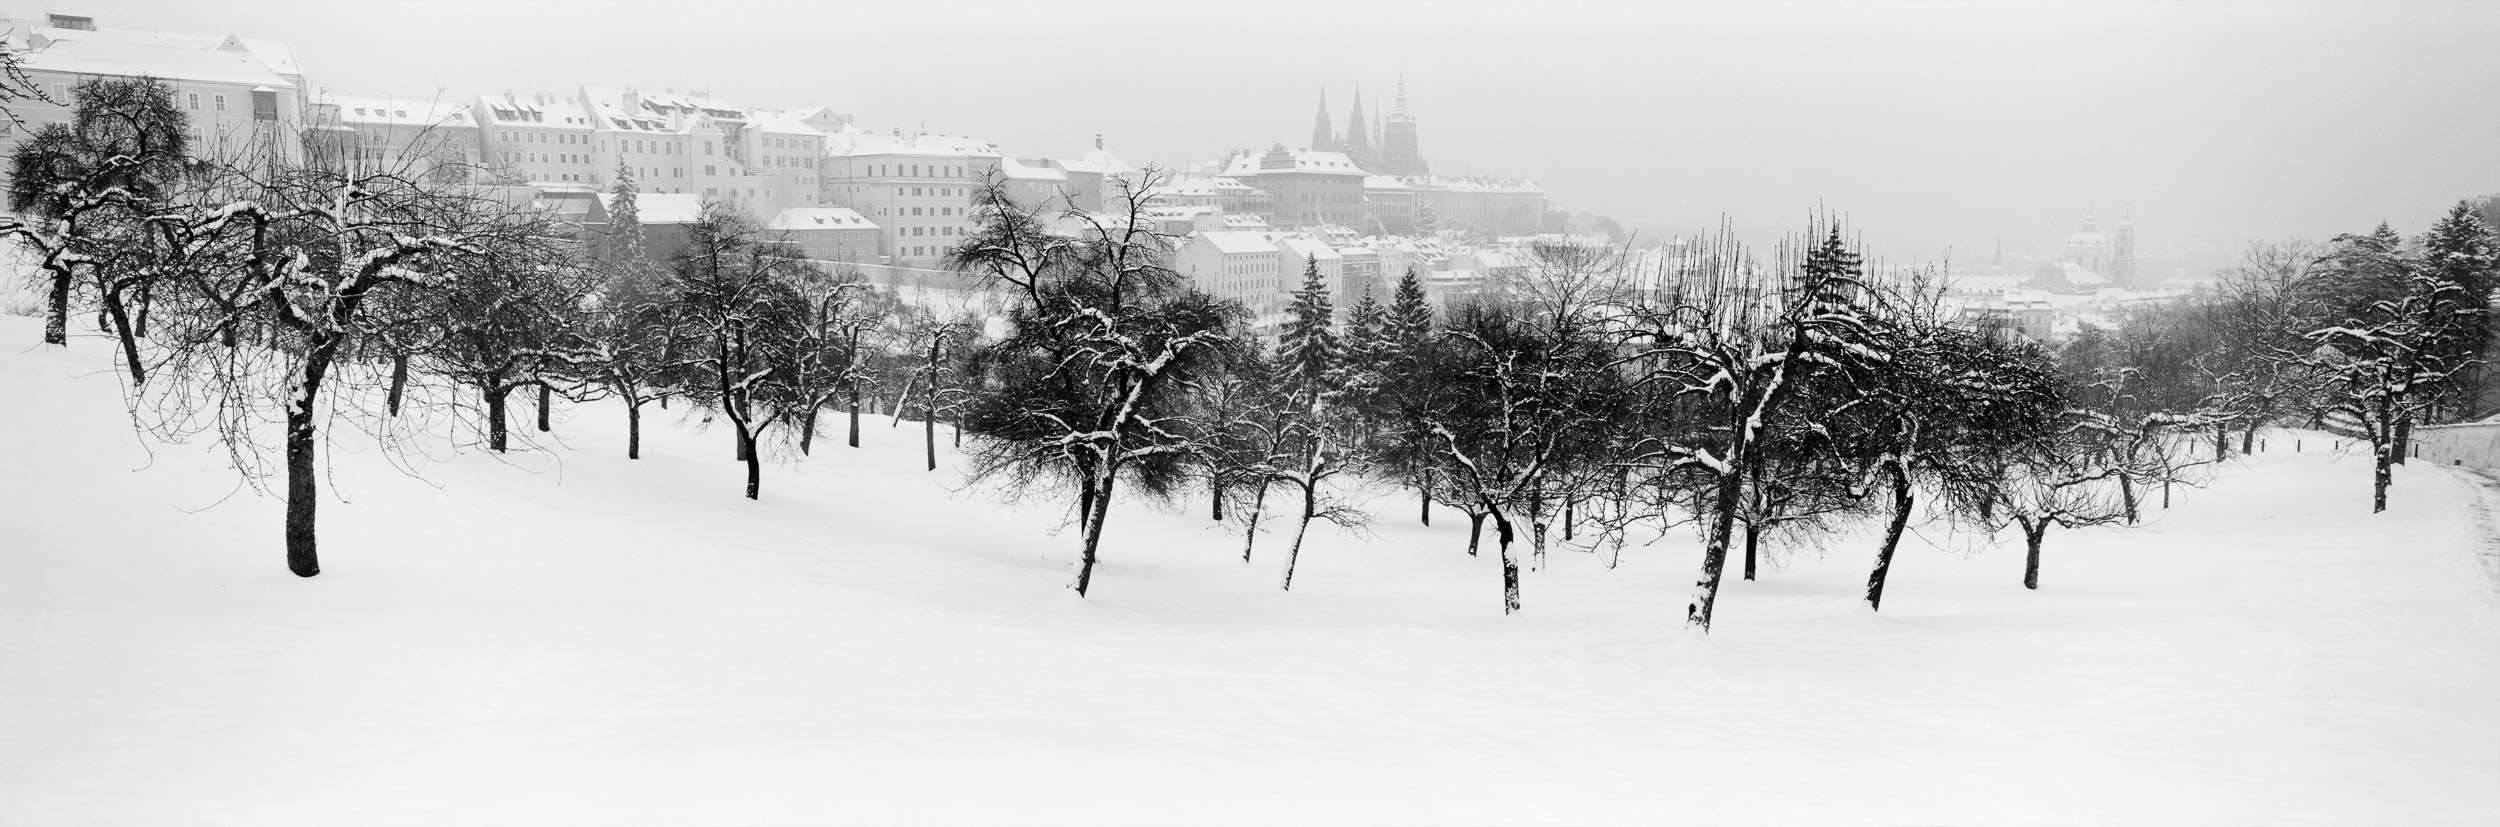  Hradcany Castle Snowfall, Prague